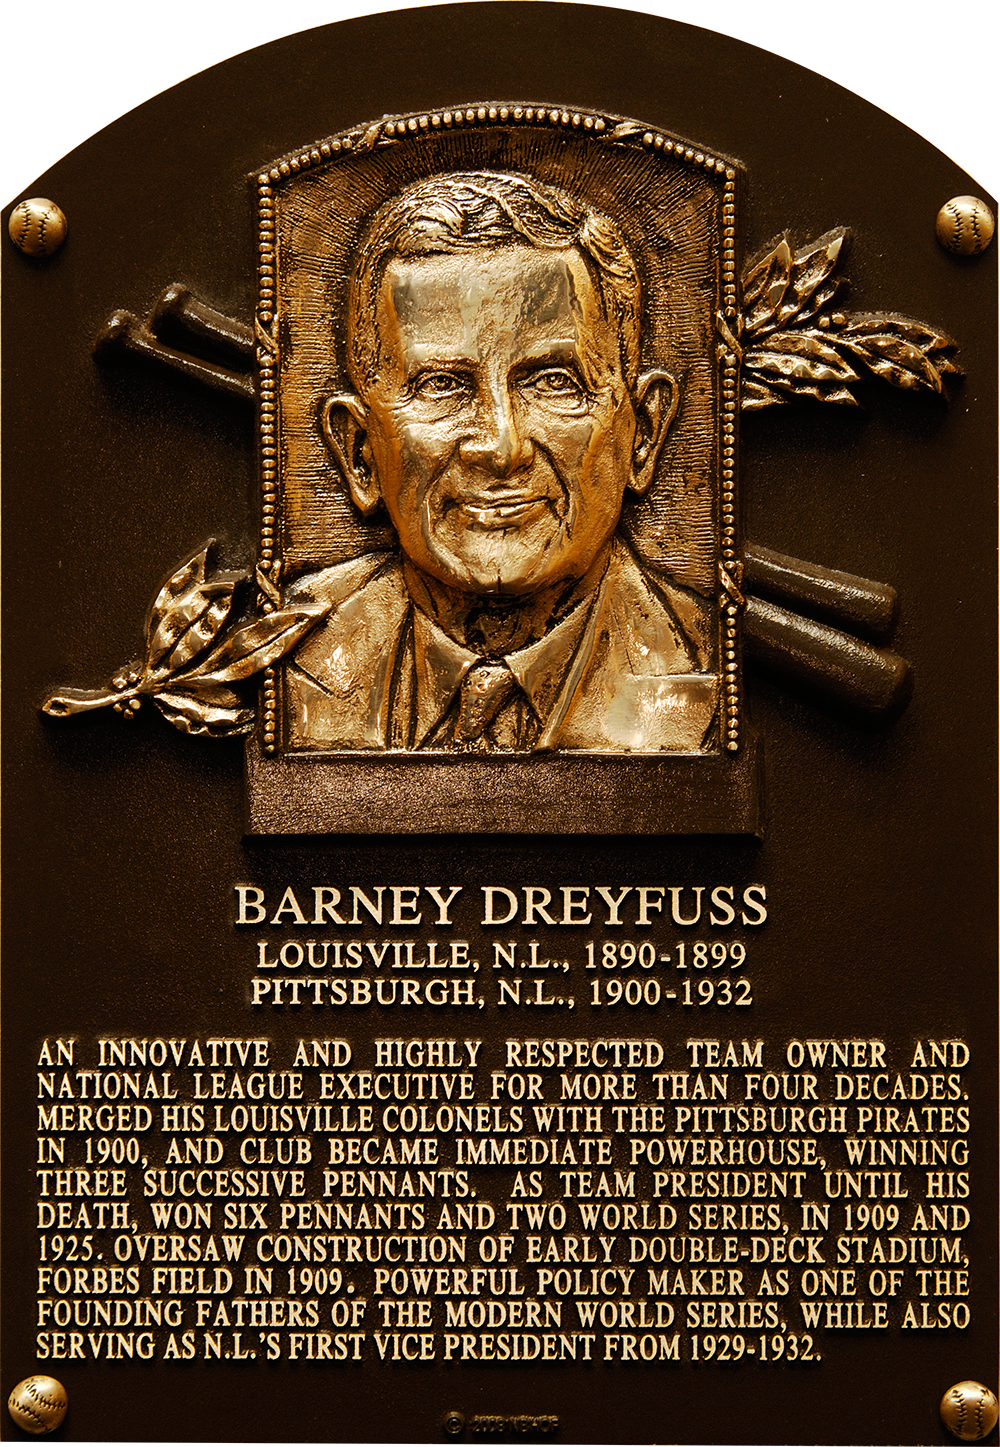 Barney Dreyfuss Hall of Fame plaque